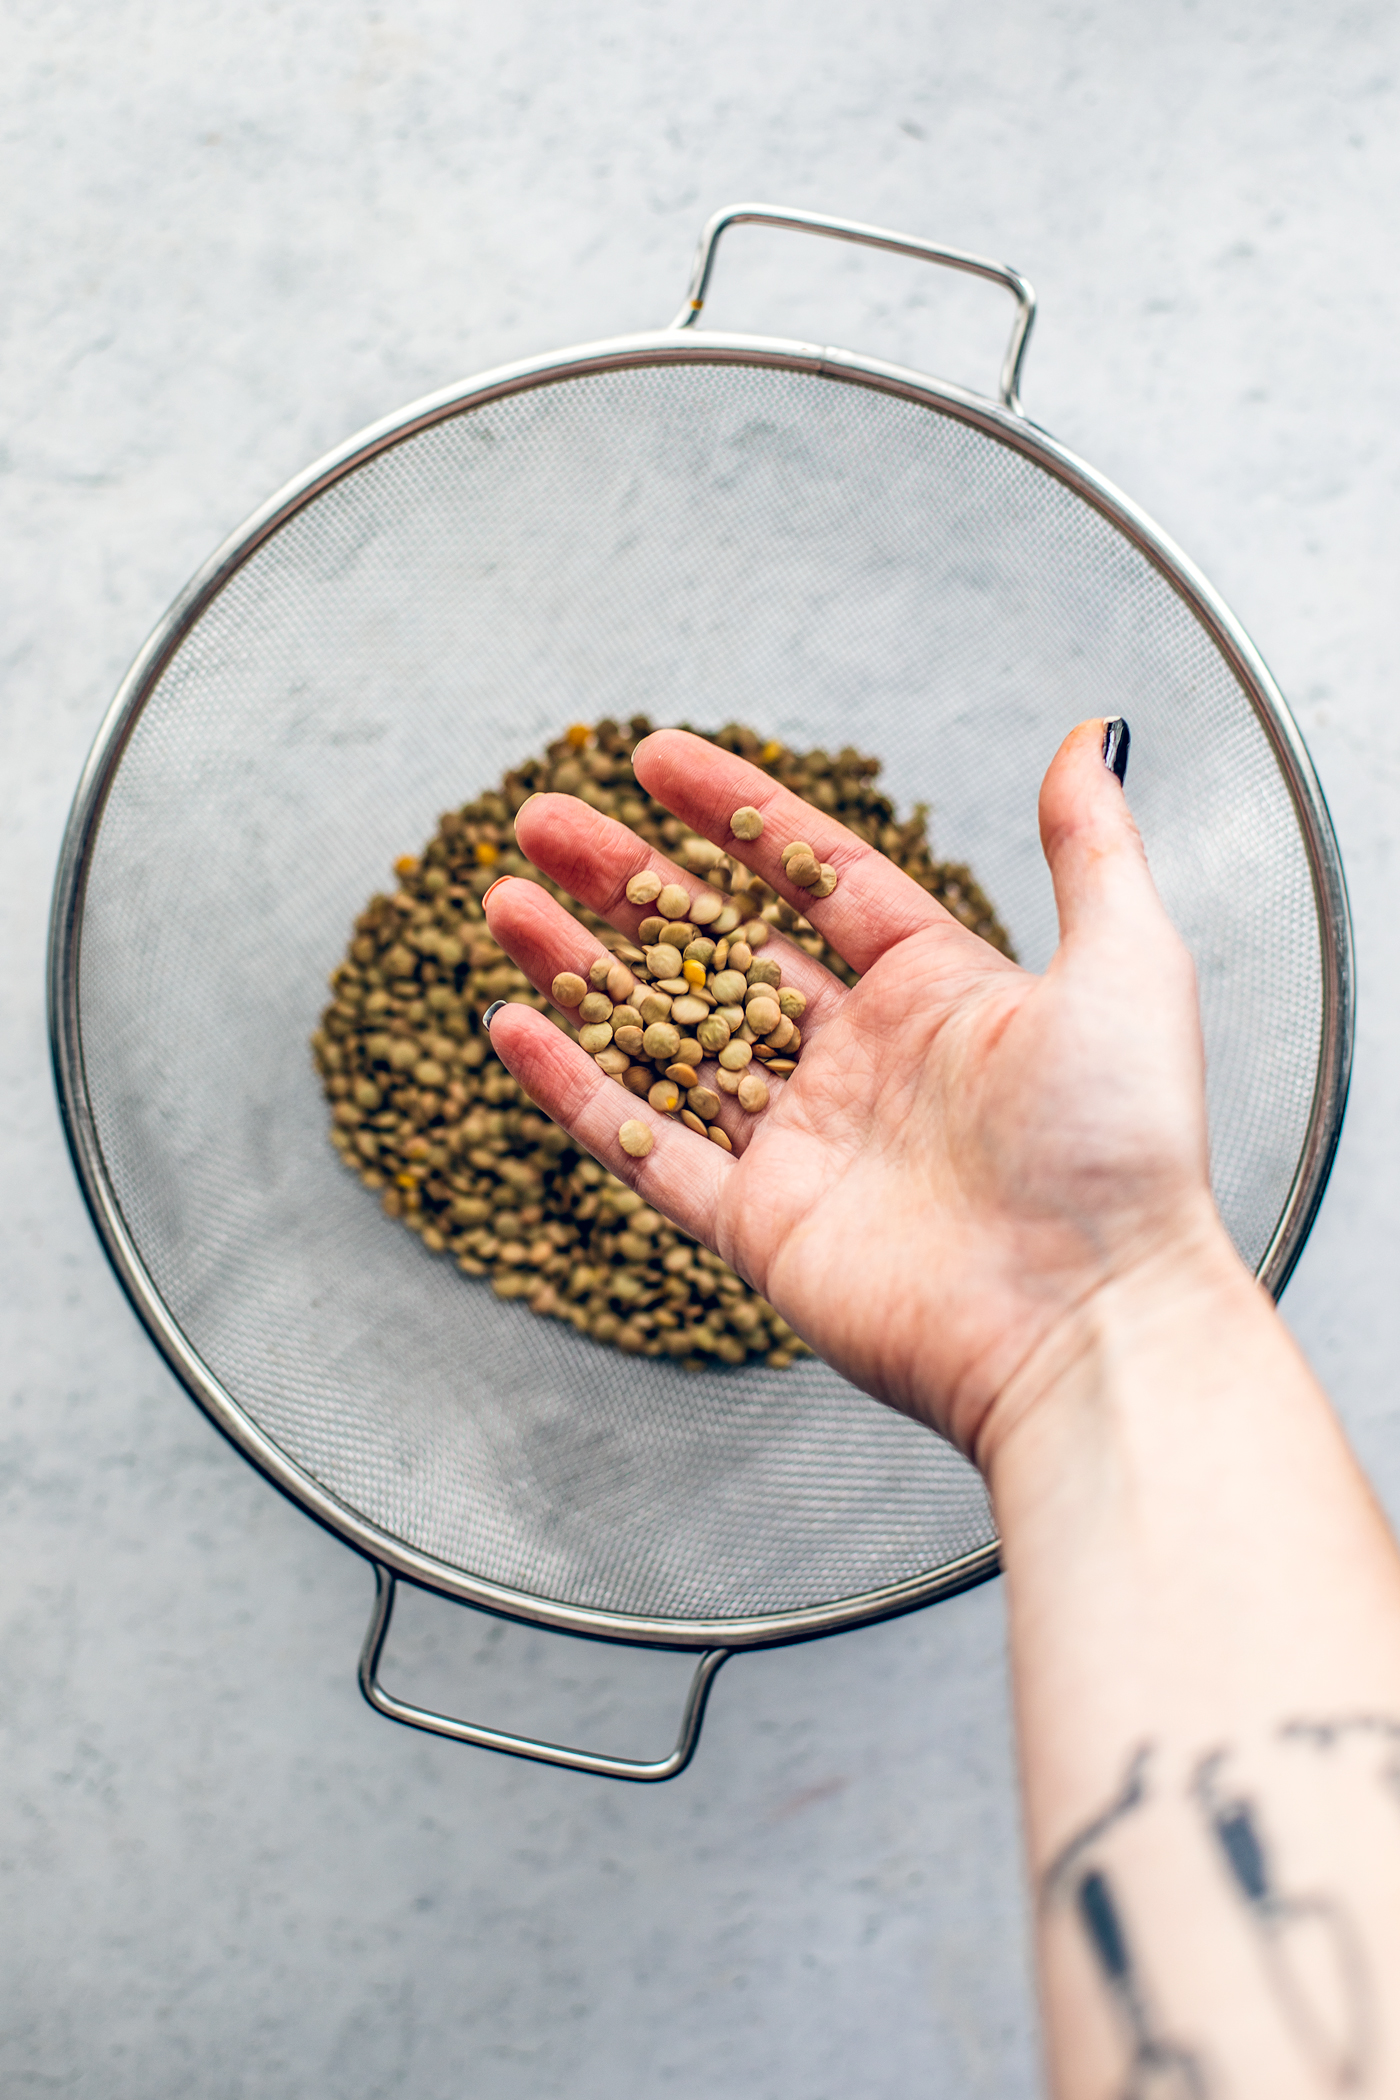 Hand sorting through lentils in colander.